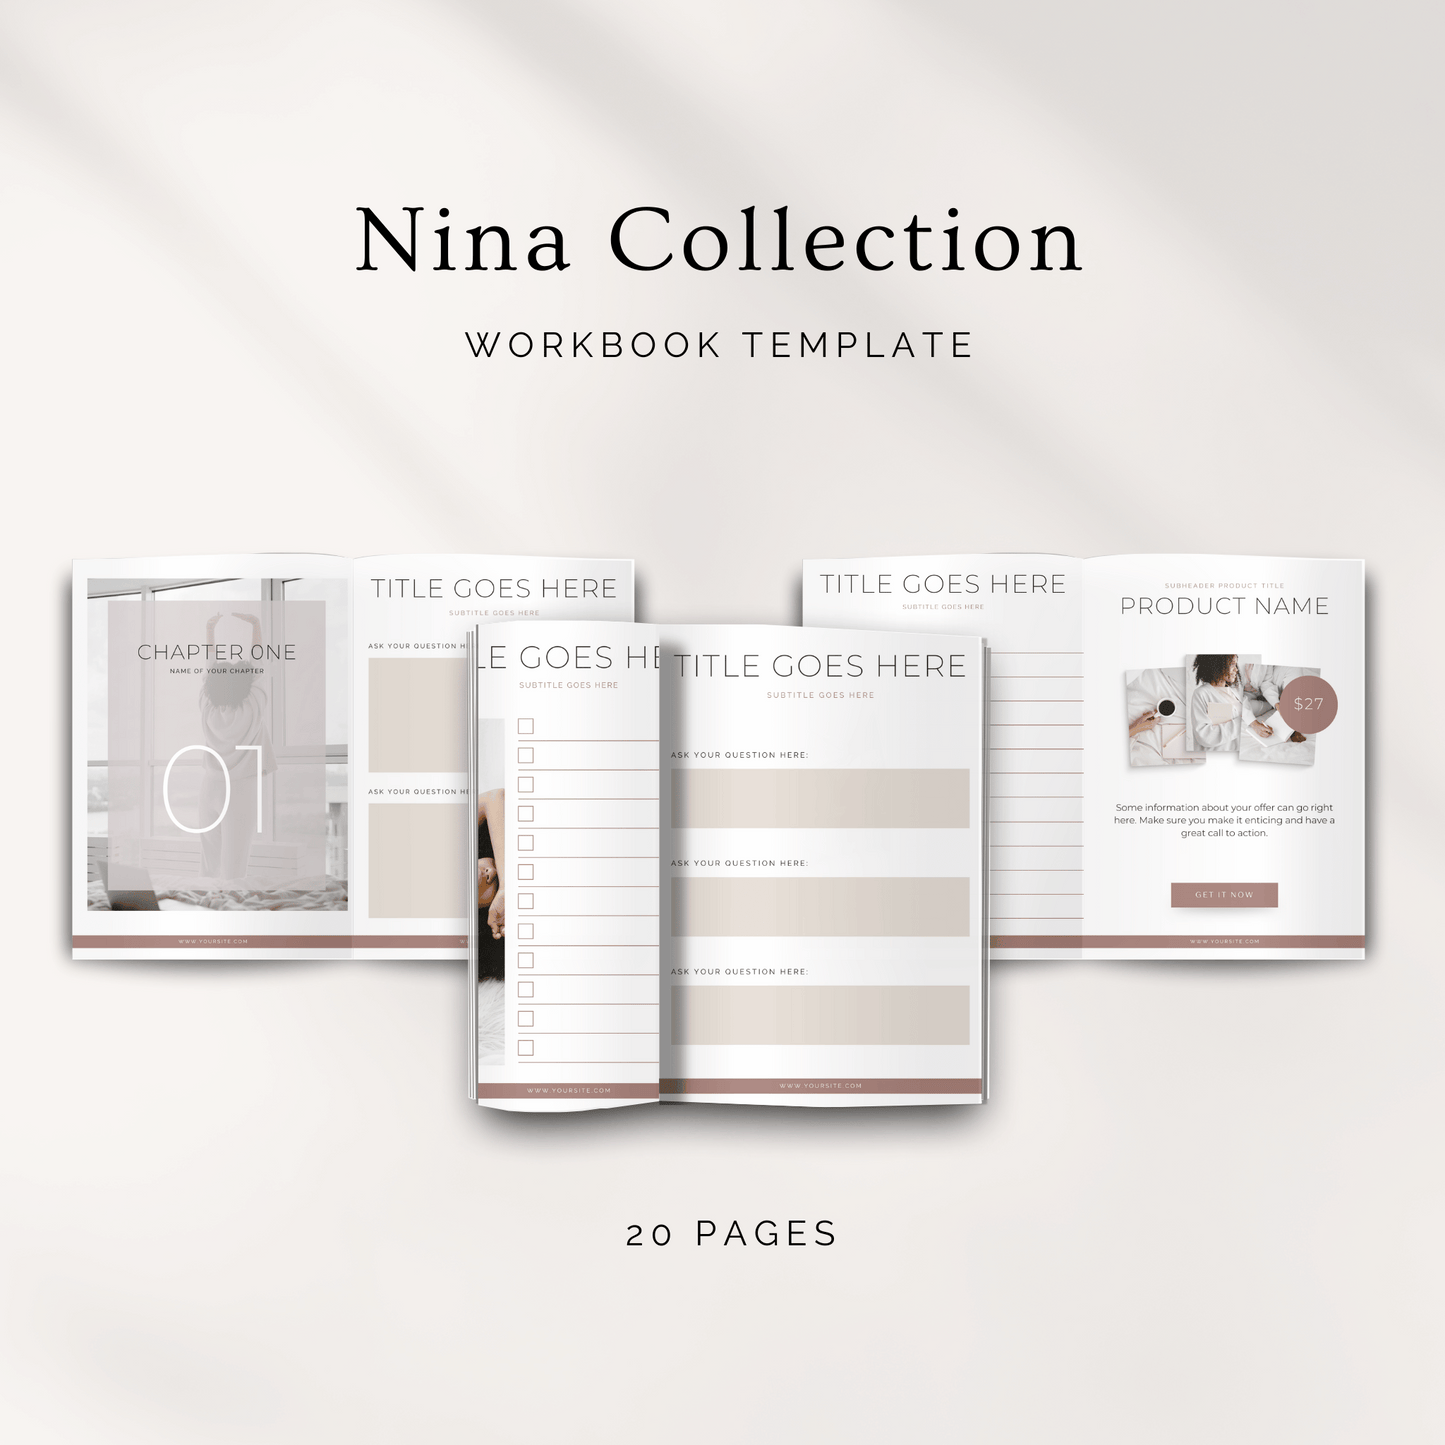 Bundle Collection of Canva Templates. Ebook, Workbook, Presentation Slide Deck and Product Mockup Canva templates for female entrepreneurs.